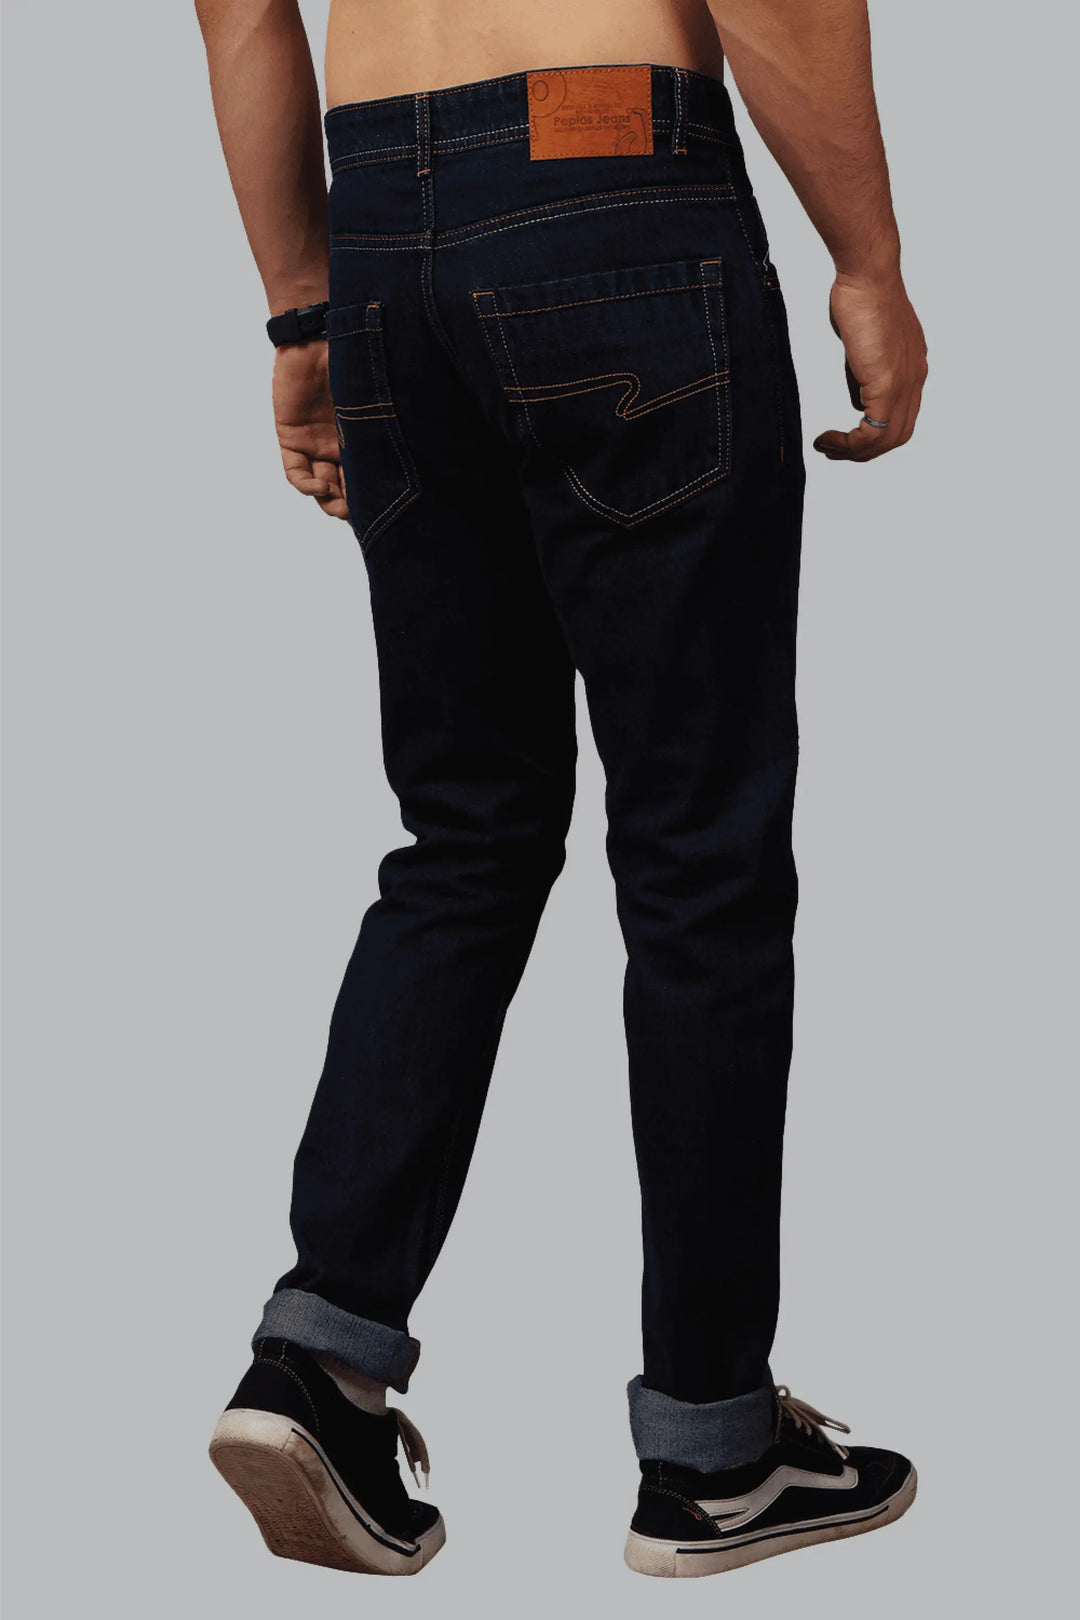 Slim Fit dark Blue Denim Jeans For Men - Peplos Jeans 